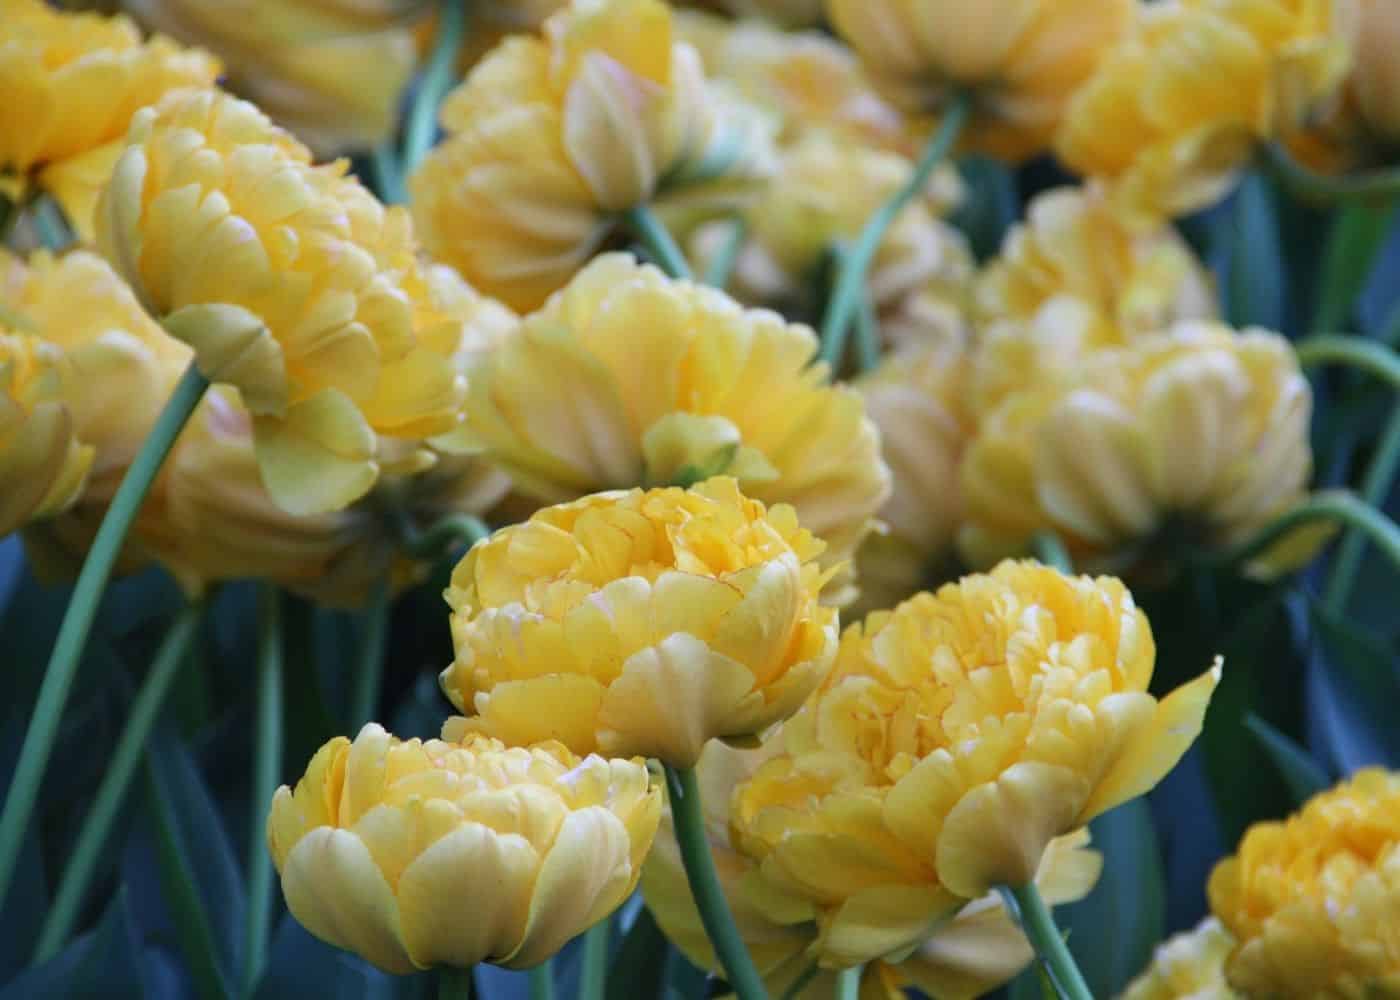 Companion plants for peonies - tulips